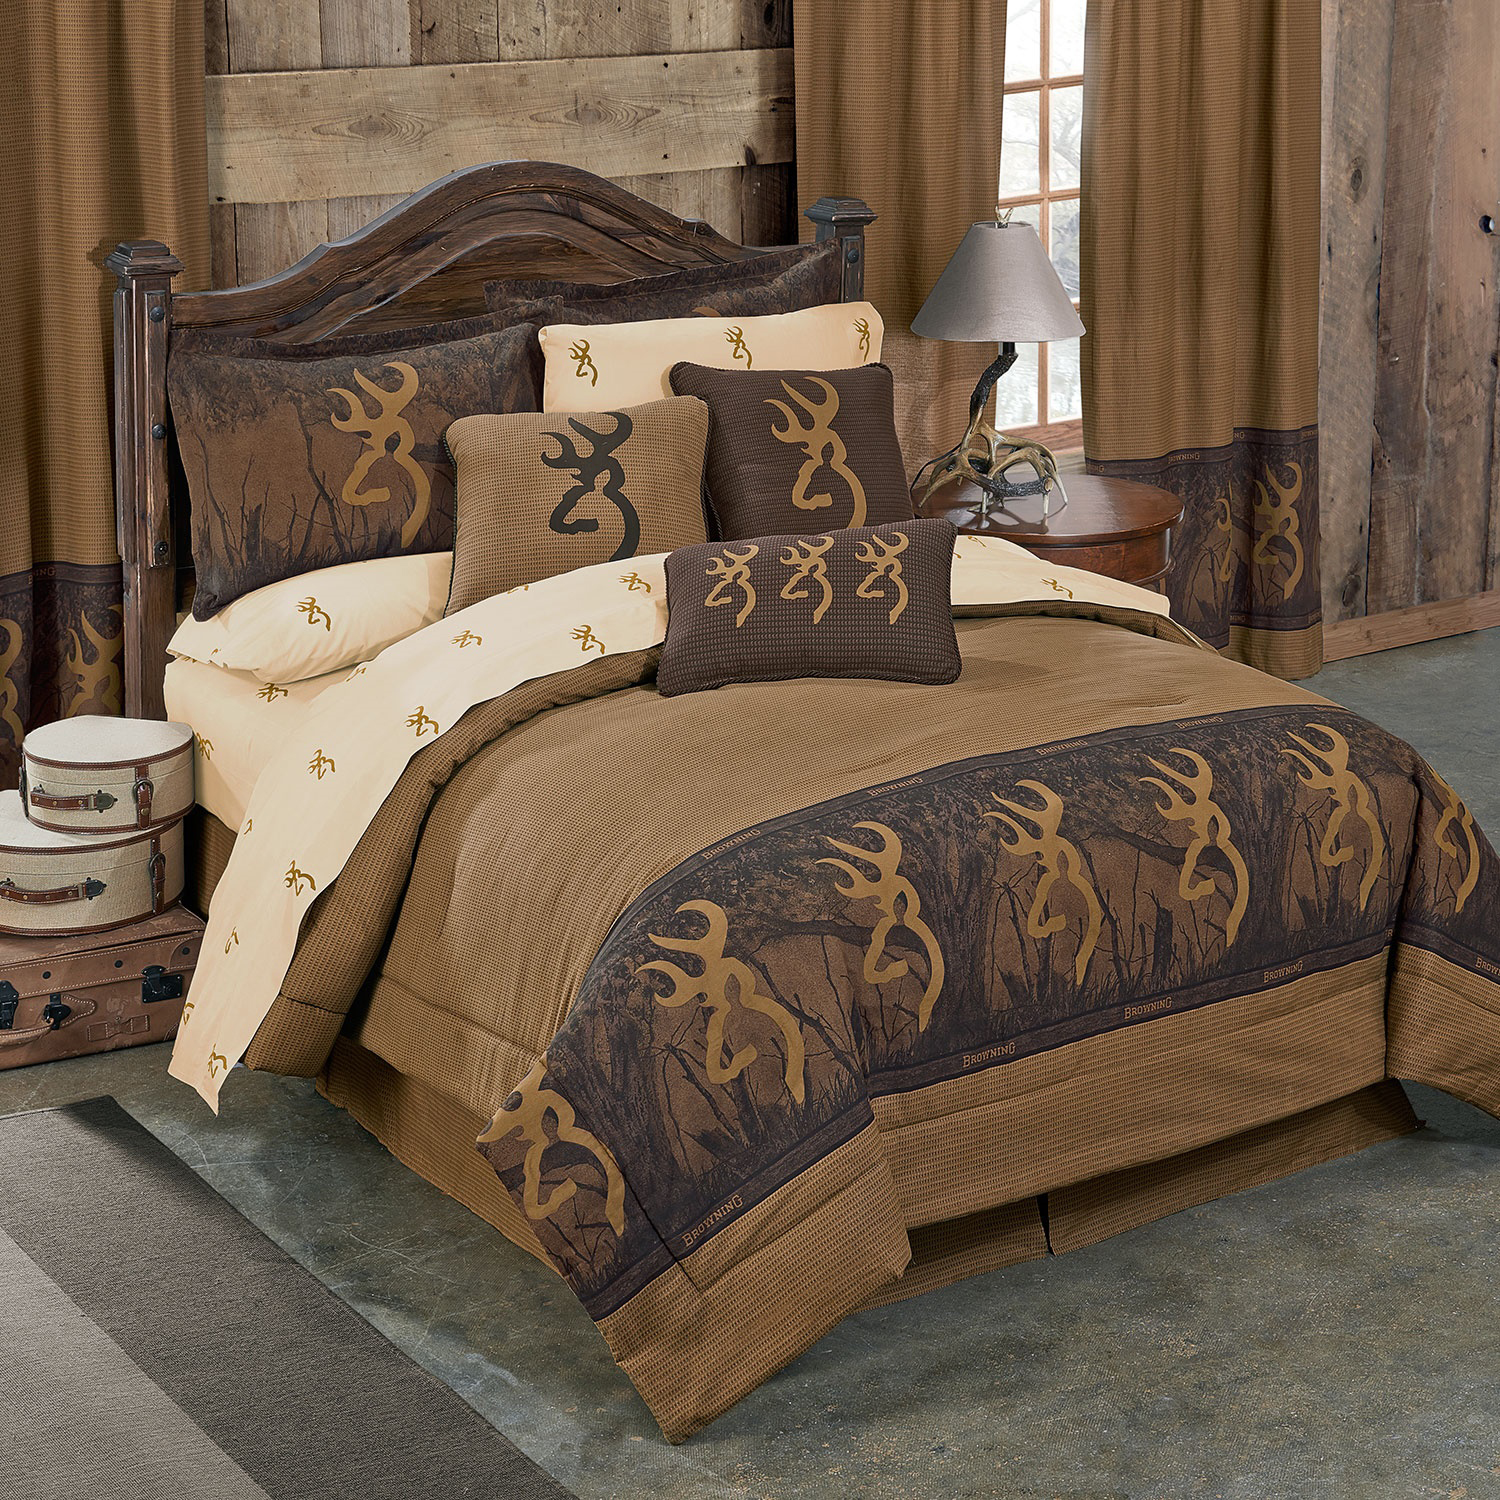 browning buckmark tree oak comforter king bedding sets beddingsuperstore themed category cabin